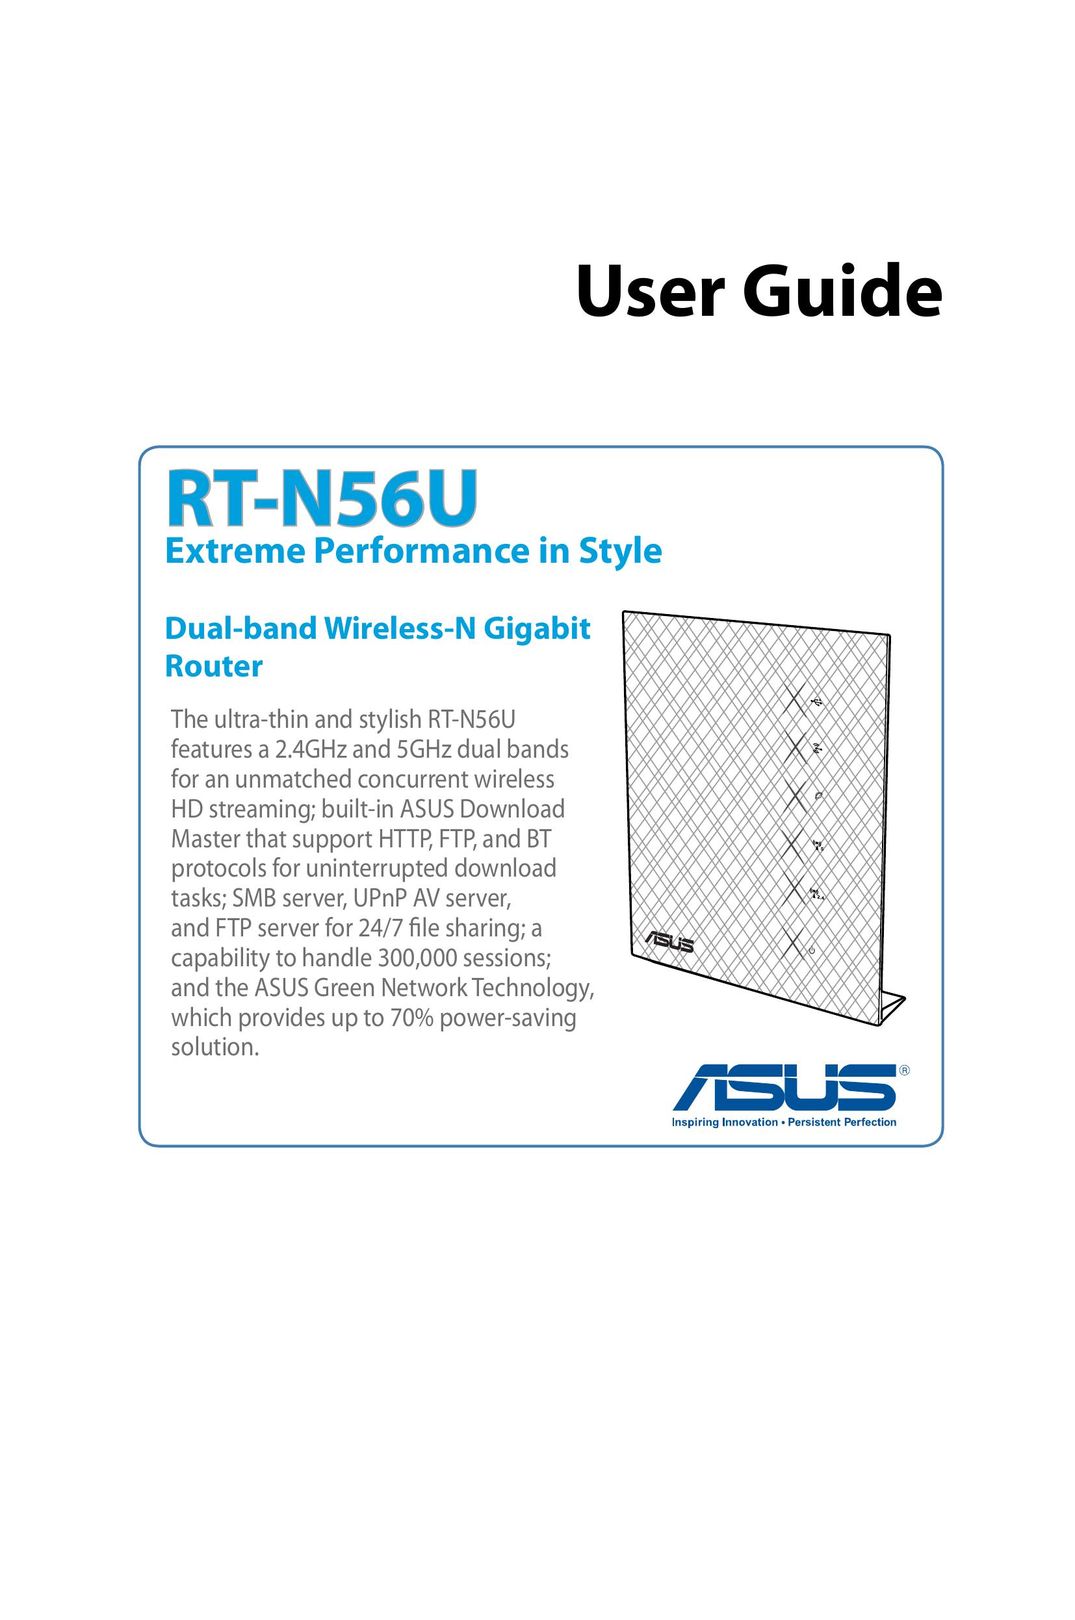 Asus RT-N56U/US/11/P_US Network Router User Manual